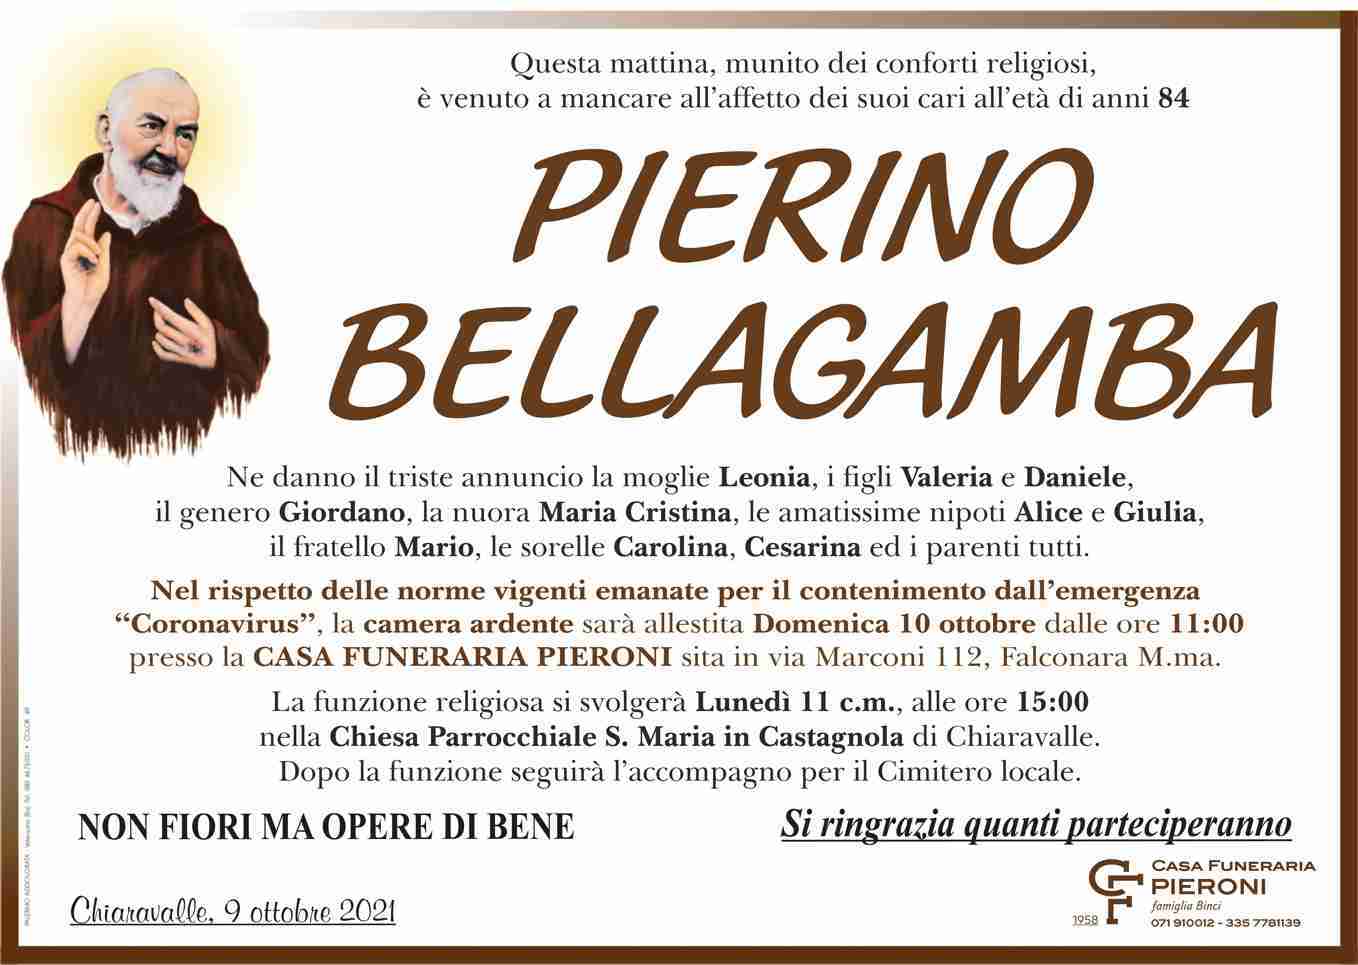 Pierino Bellagamba